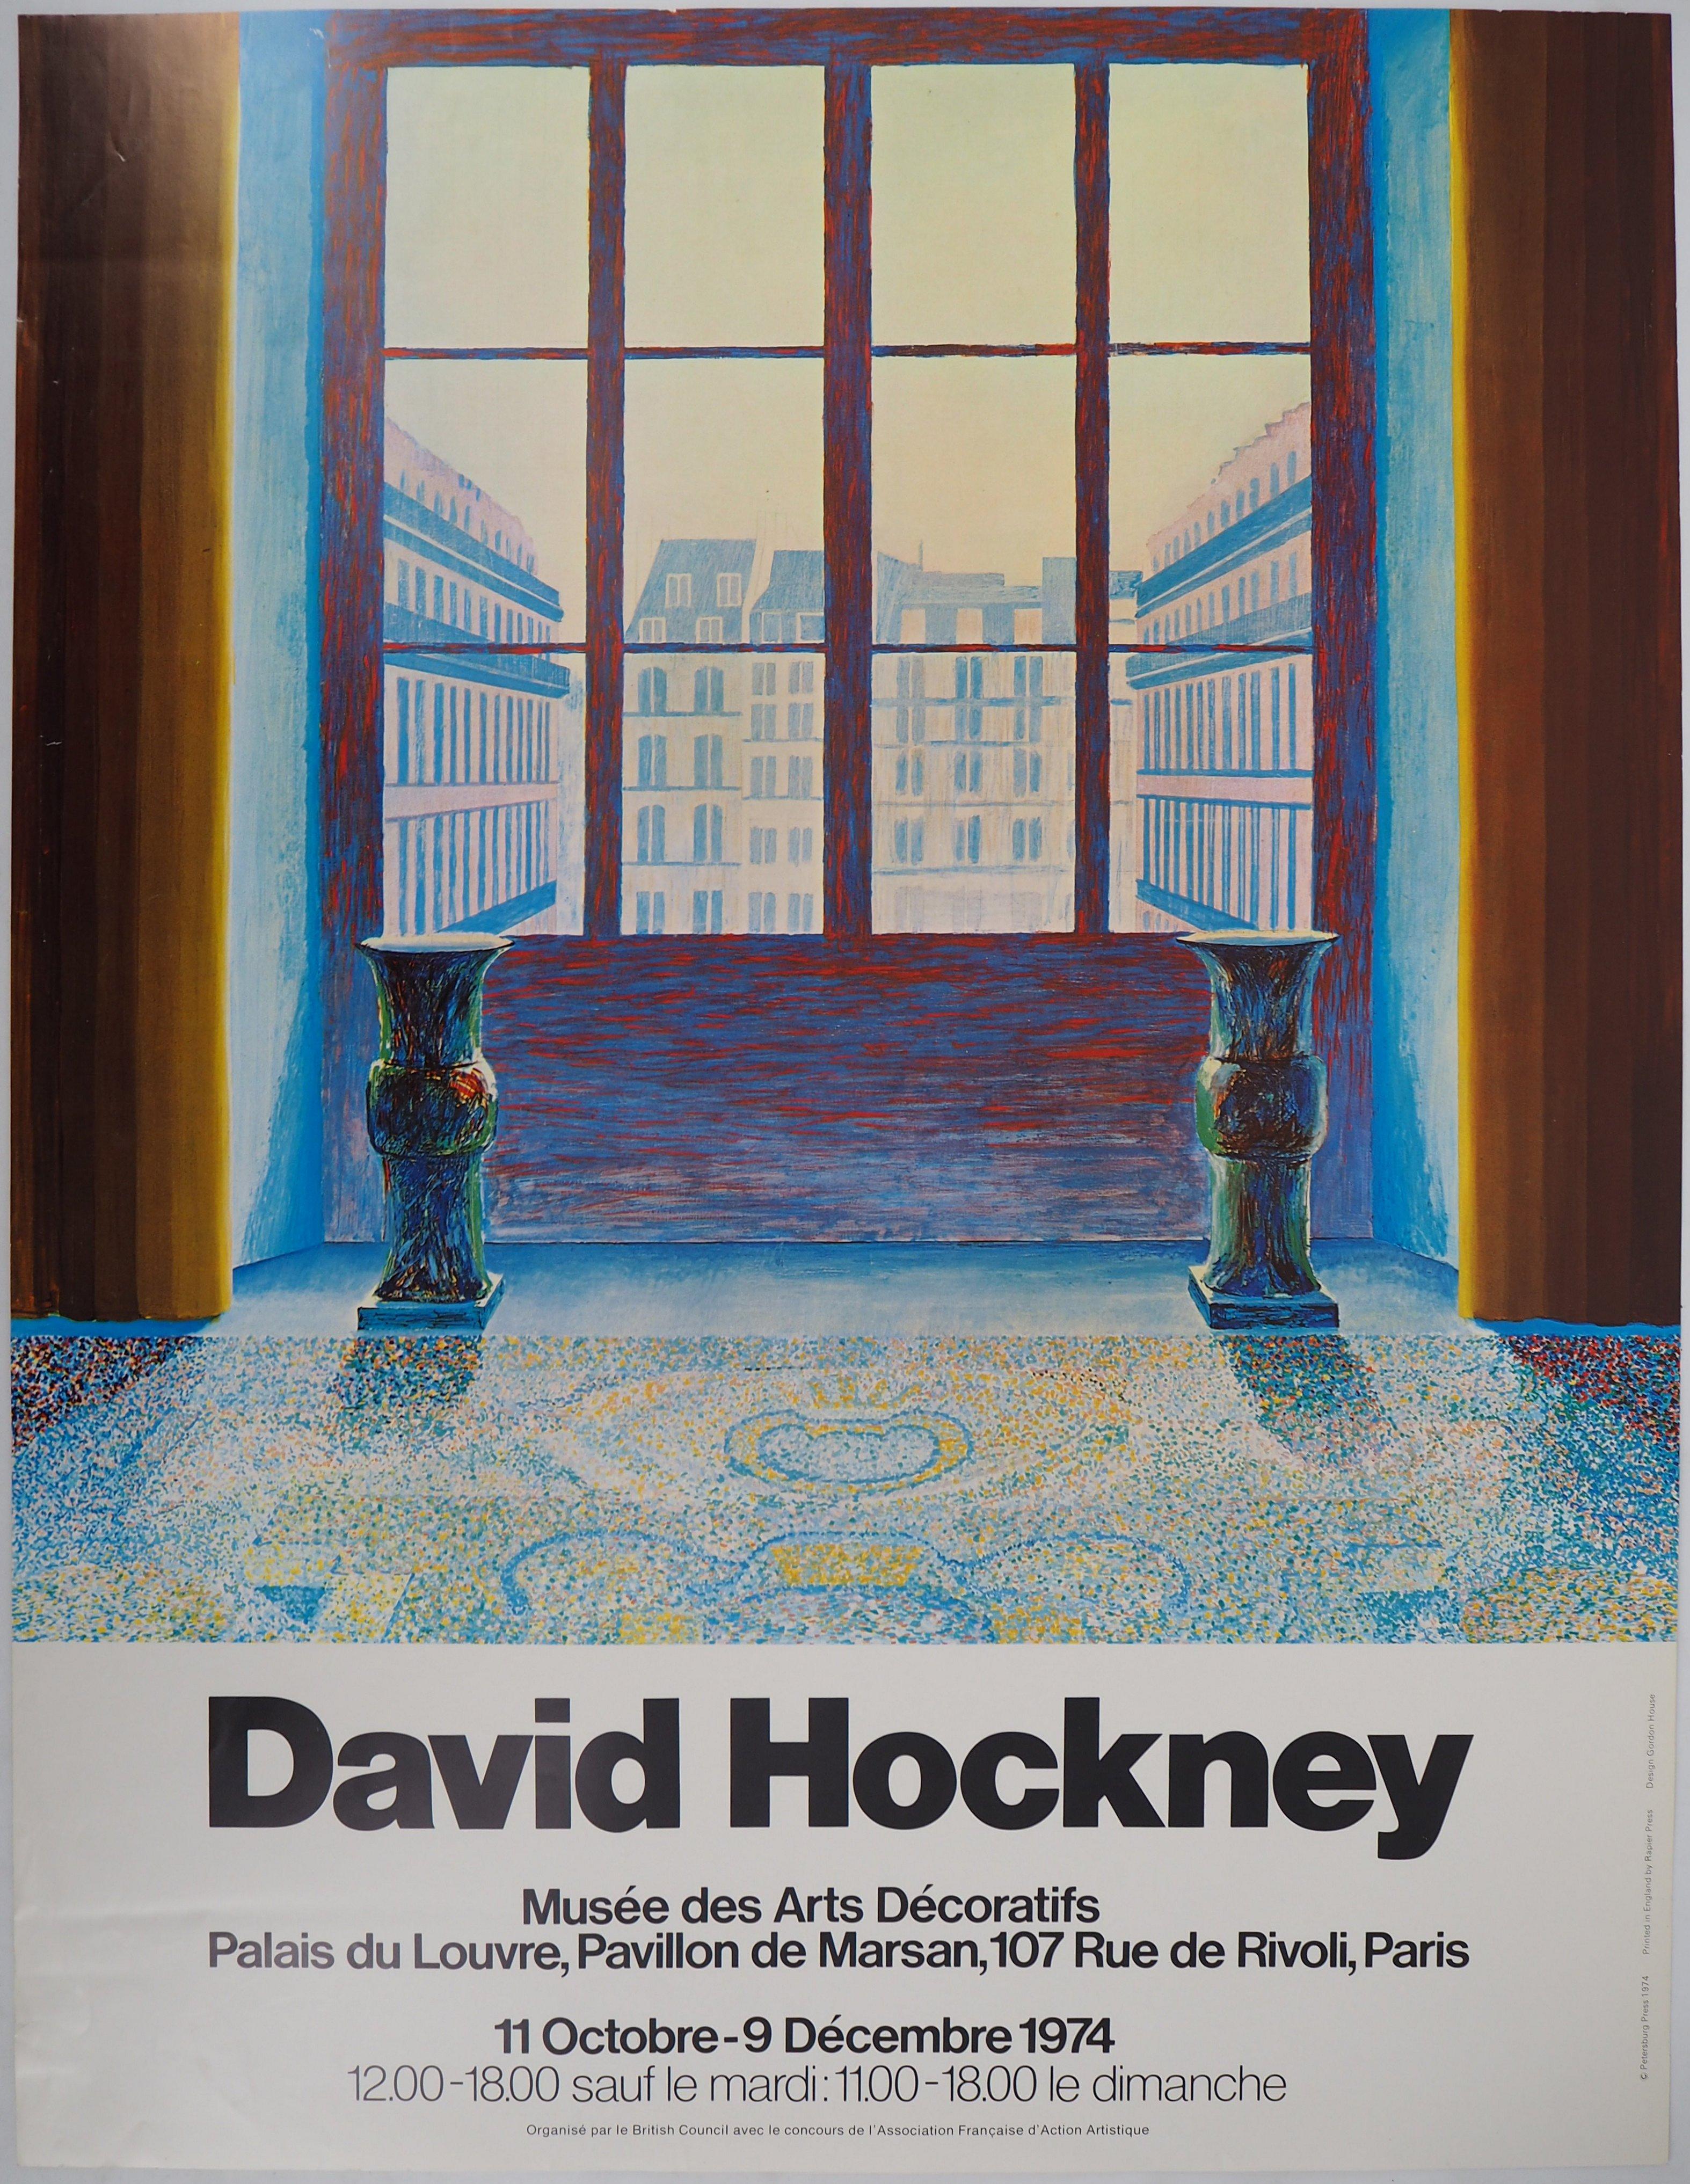 (after) David Hockney Figurative Print - David Hockney at Louvre Museum (Paris) - Original Vintage Poster